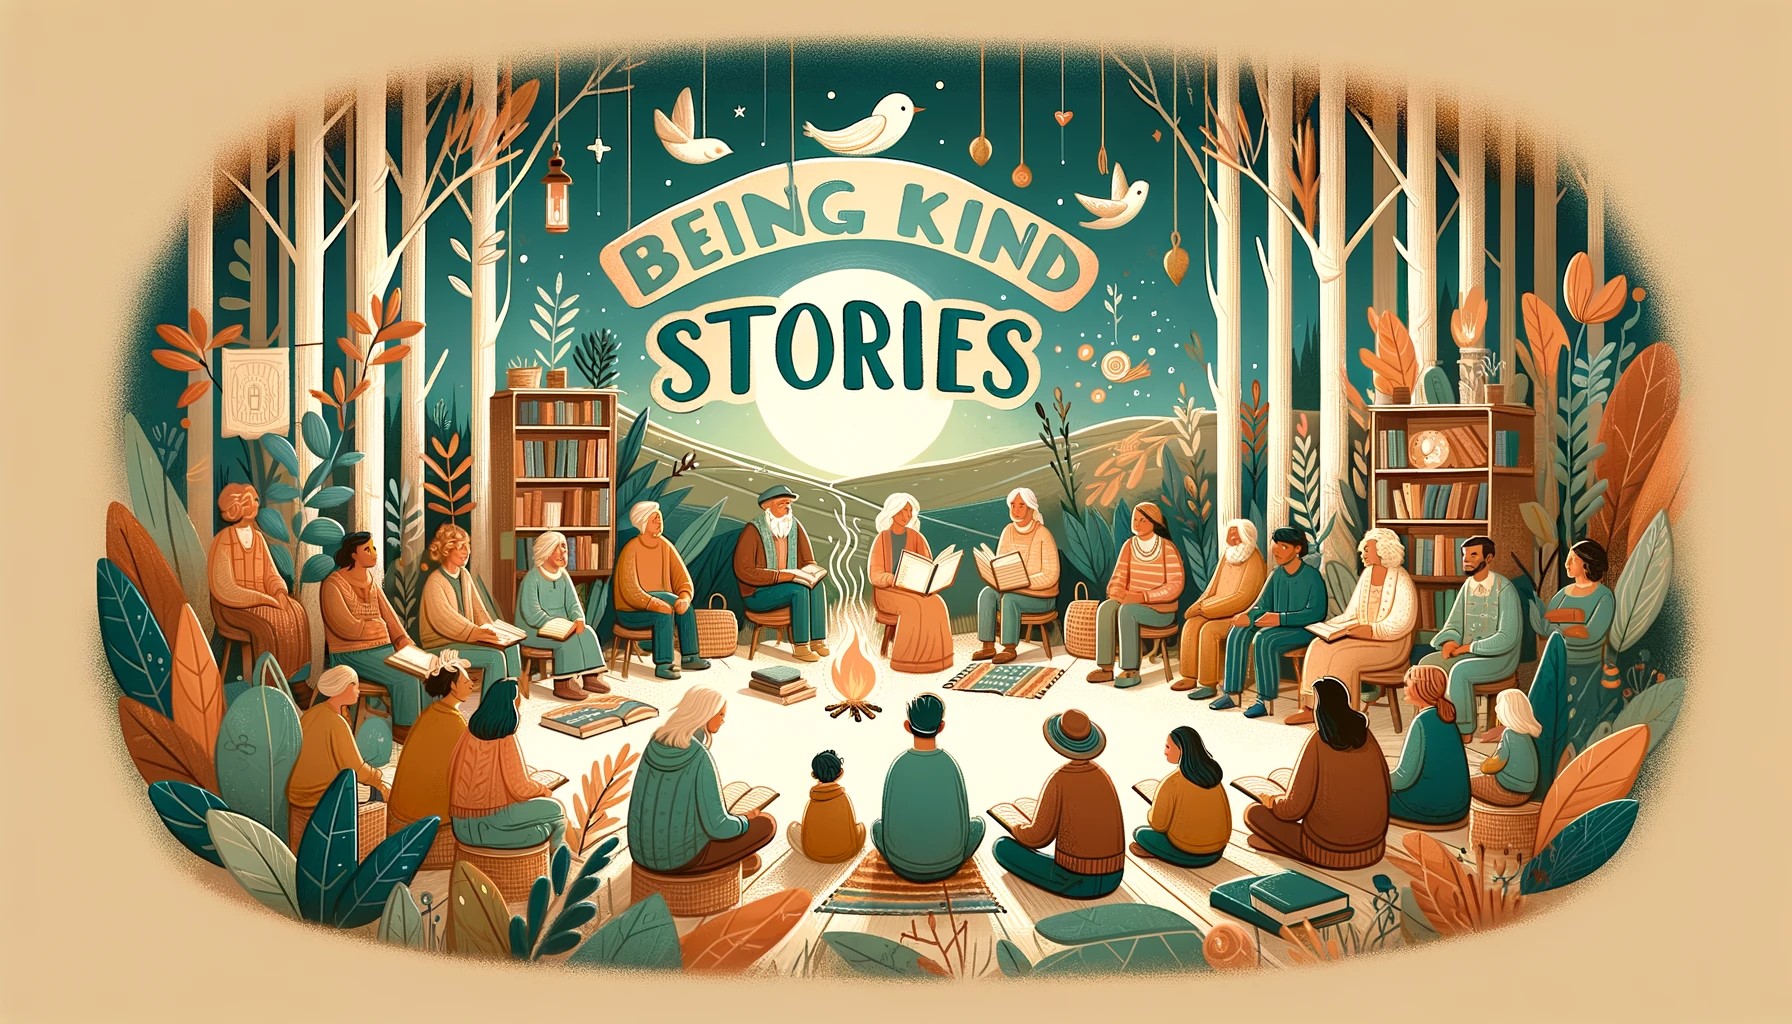 Being Kind Stories